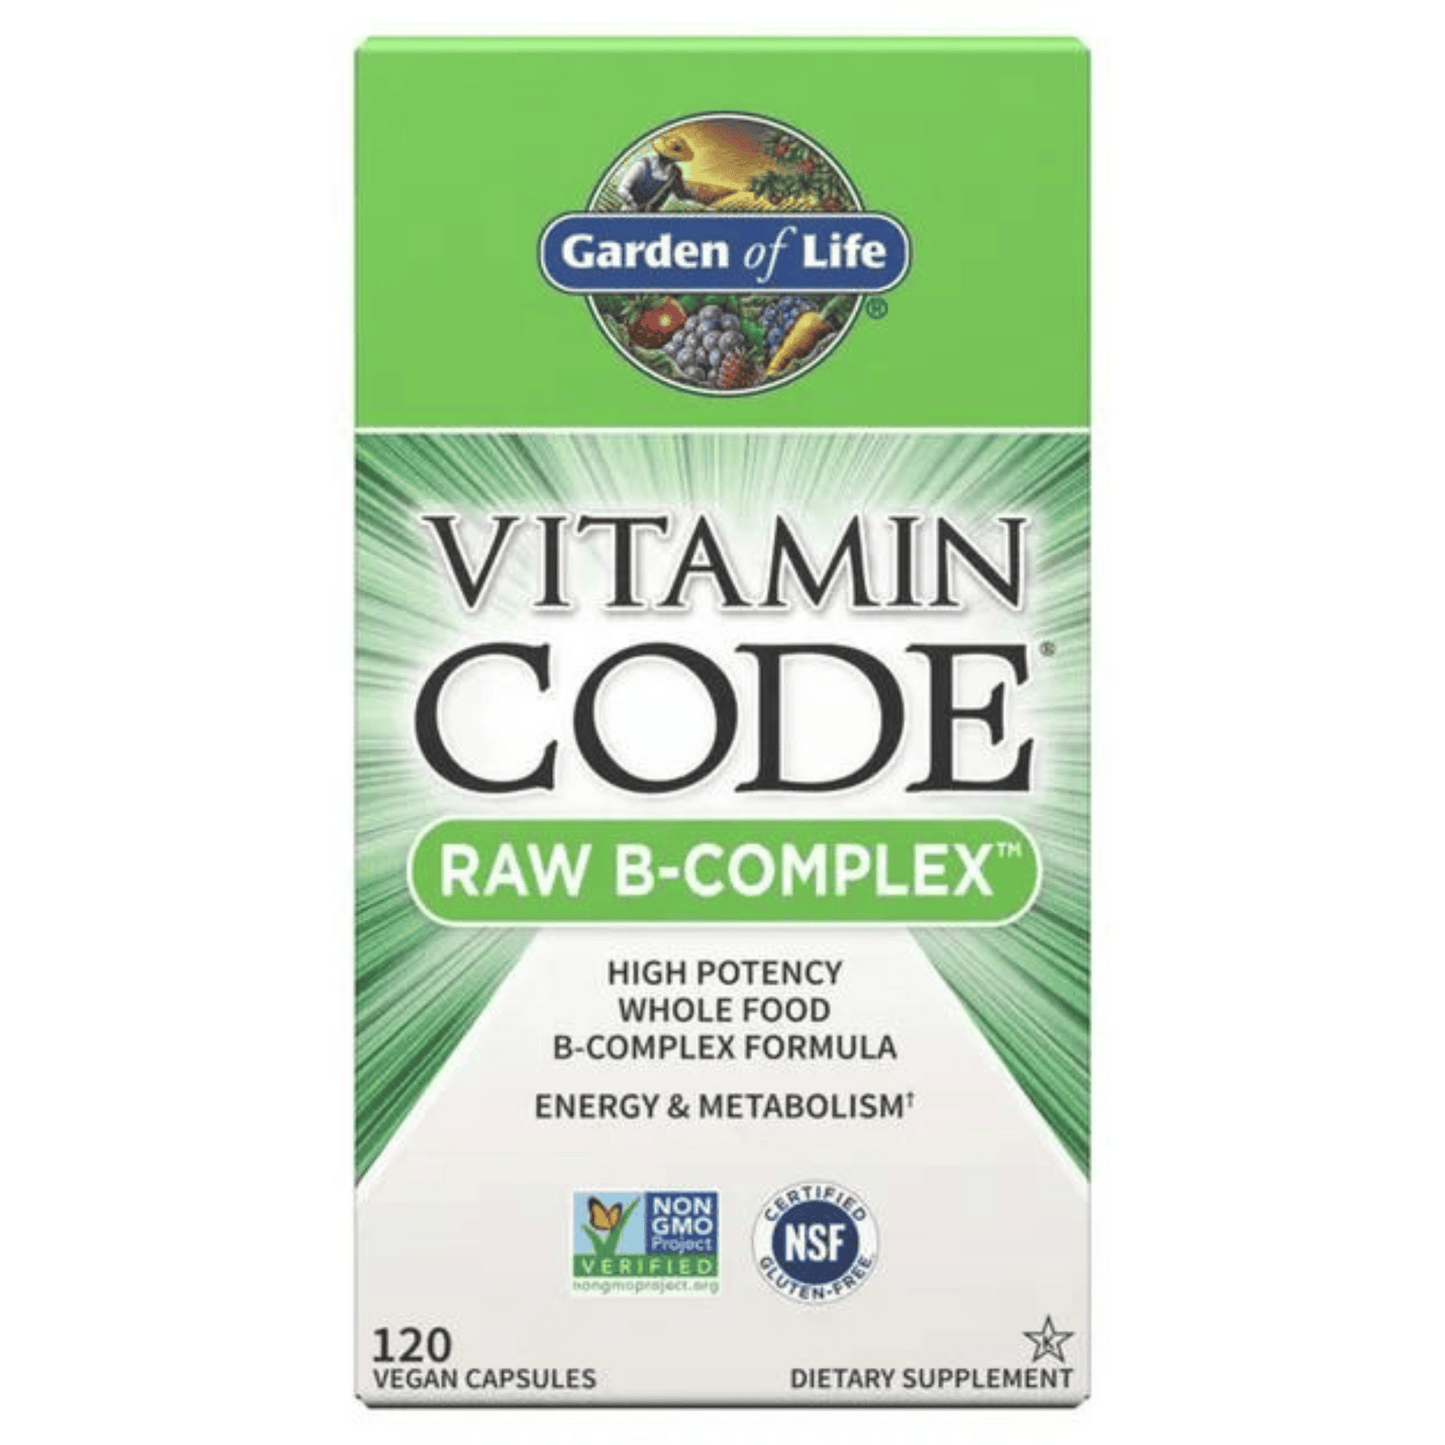 Primary Image of Vitamin Code Raw B-Complex Capsules